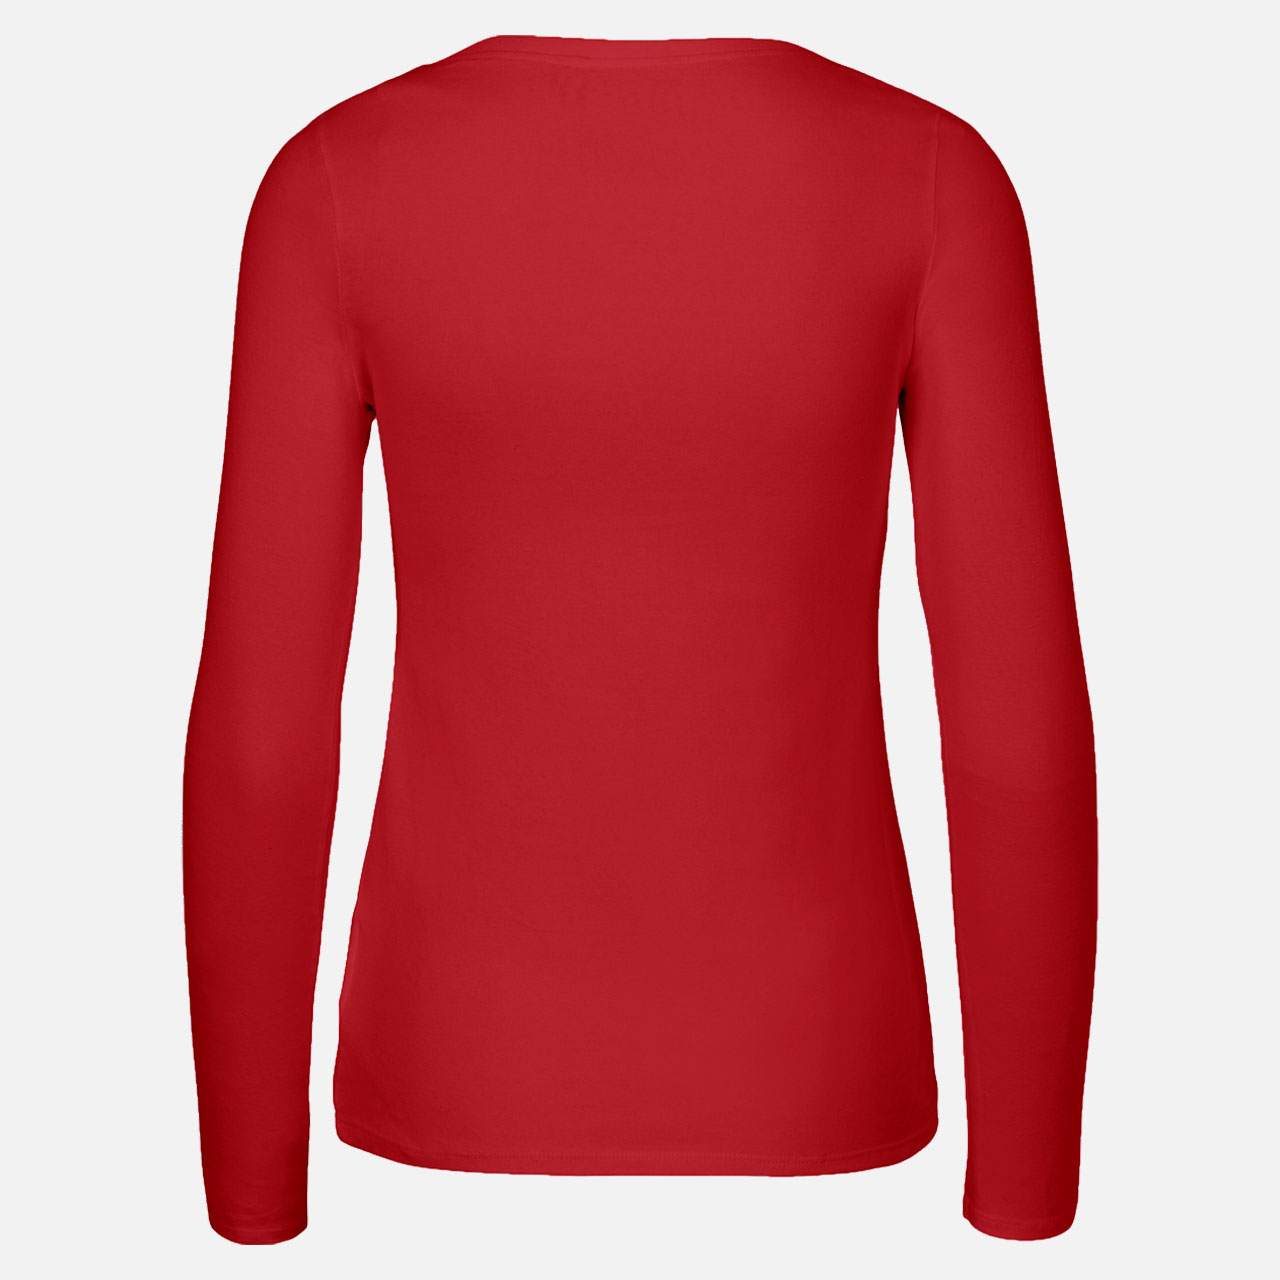 Doppelpack Ladies Long Sleeve Shirt - Weiss / Rot XL Weiss / Rot